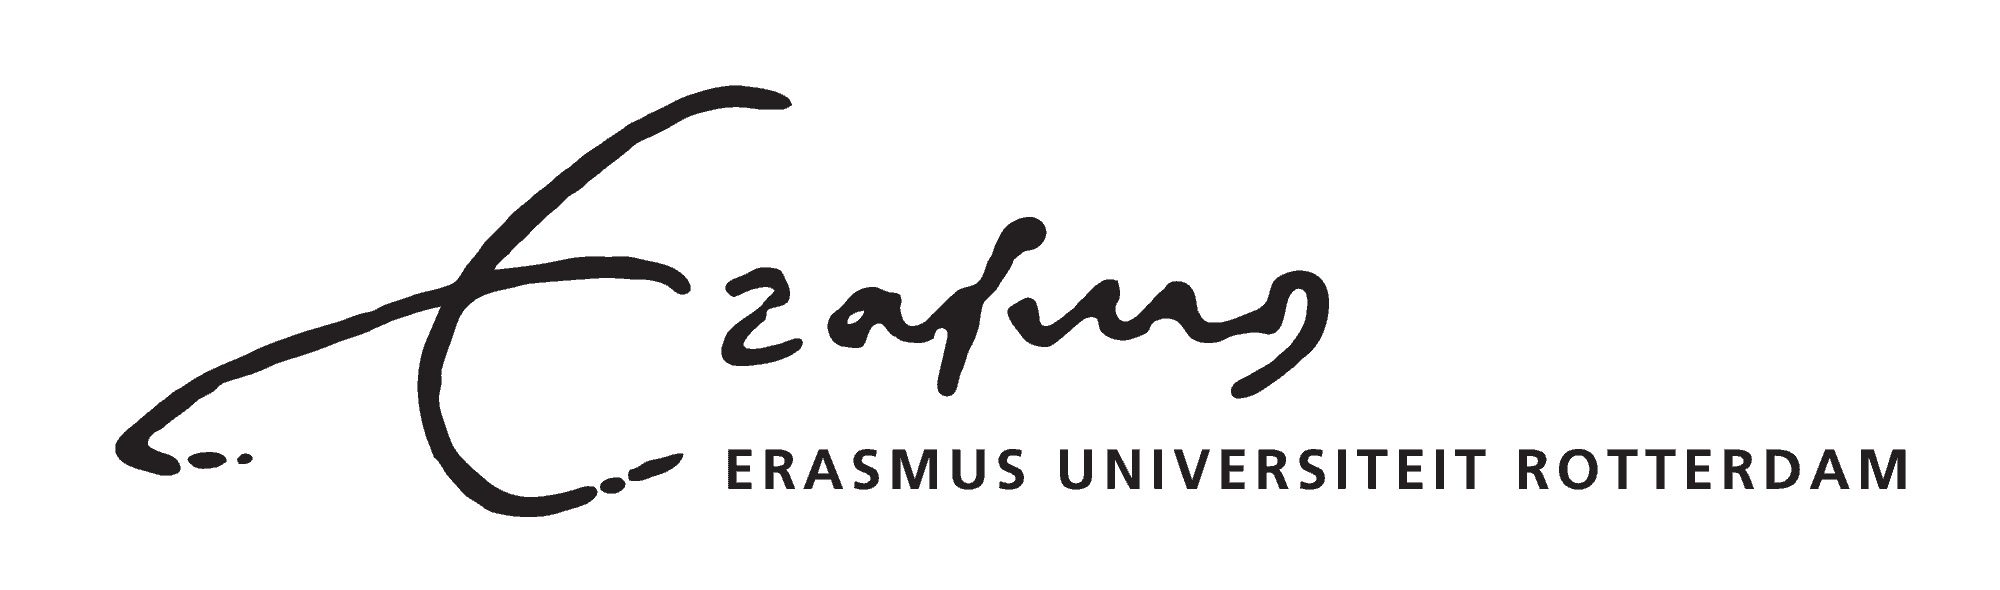 Alles over Erasmus universiteit rotterdam